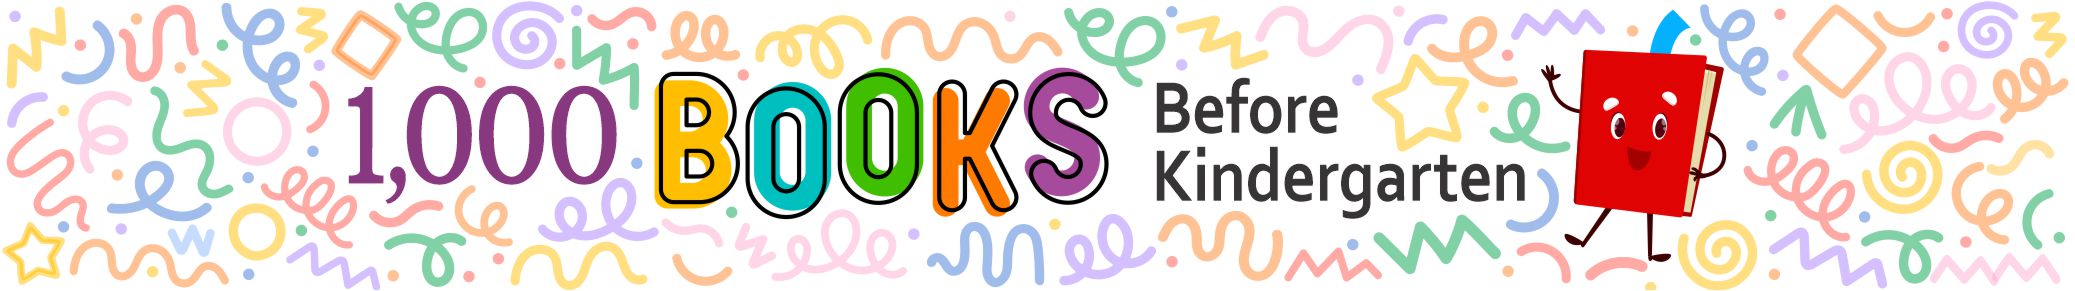 1000books_website